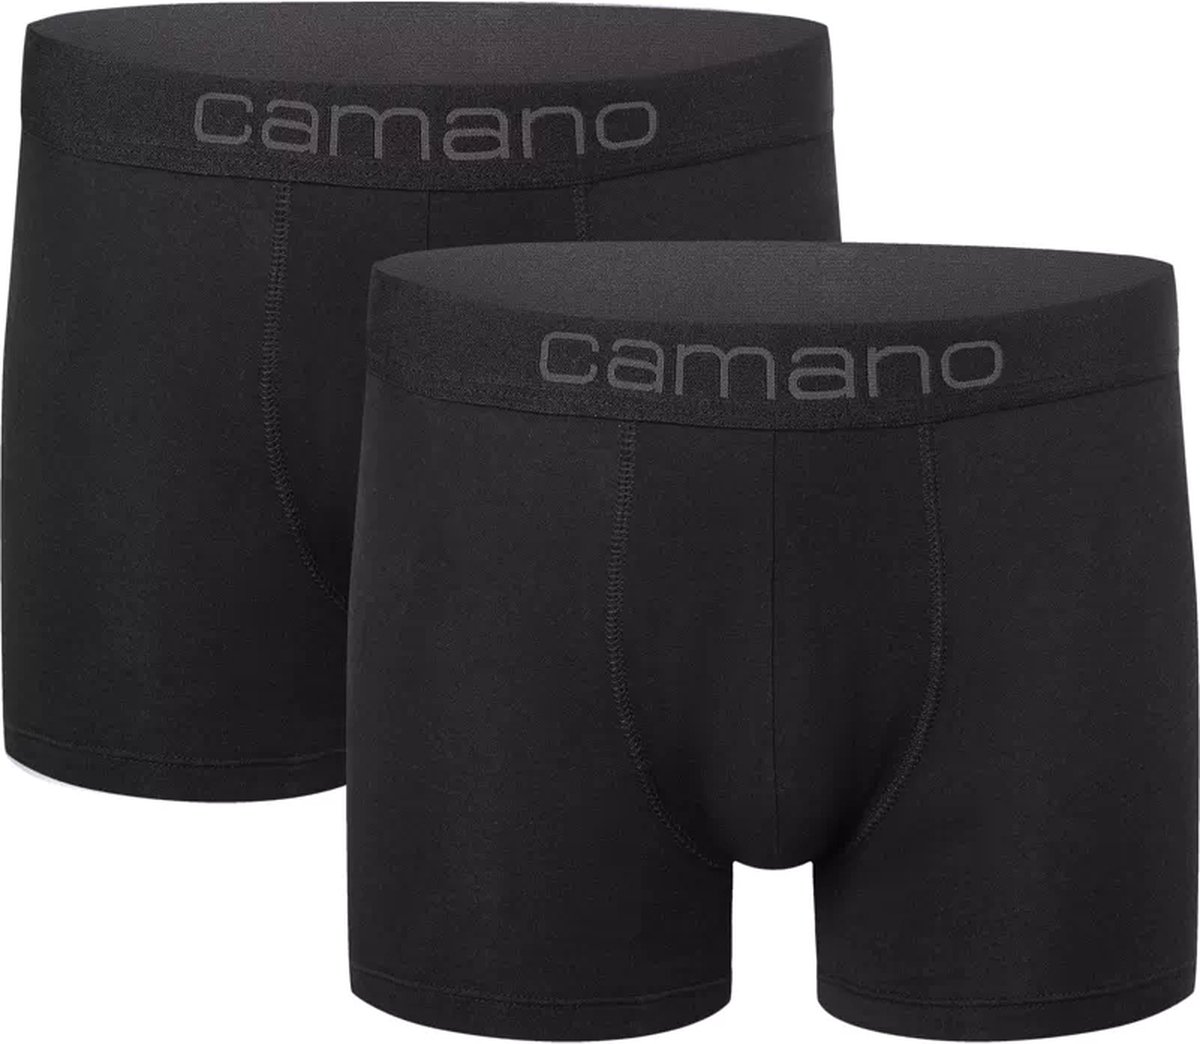 Camano - Boxershorts - High Comfort - Katoen - Stretch - Top Boxers - Zwart - L